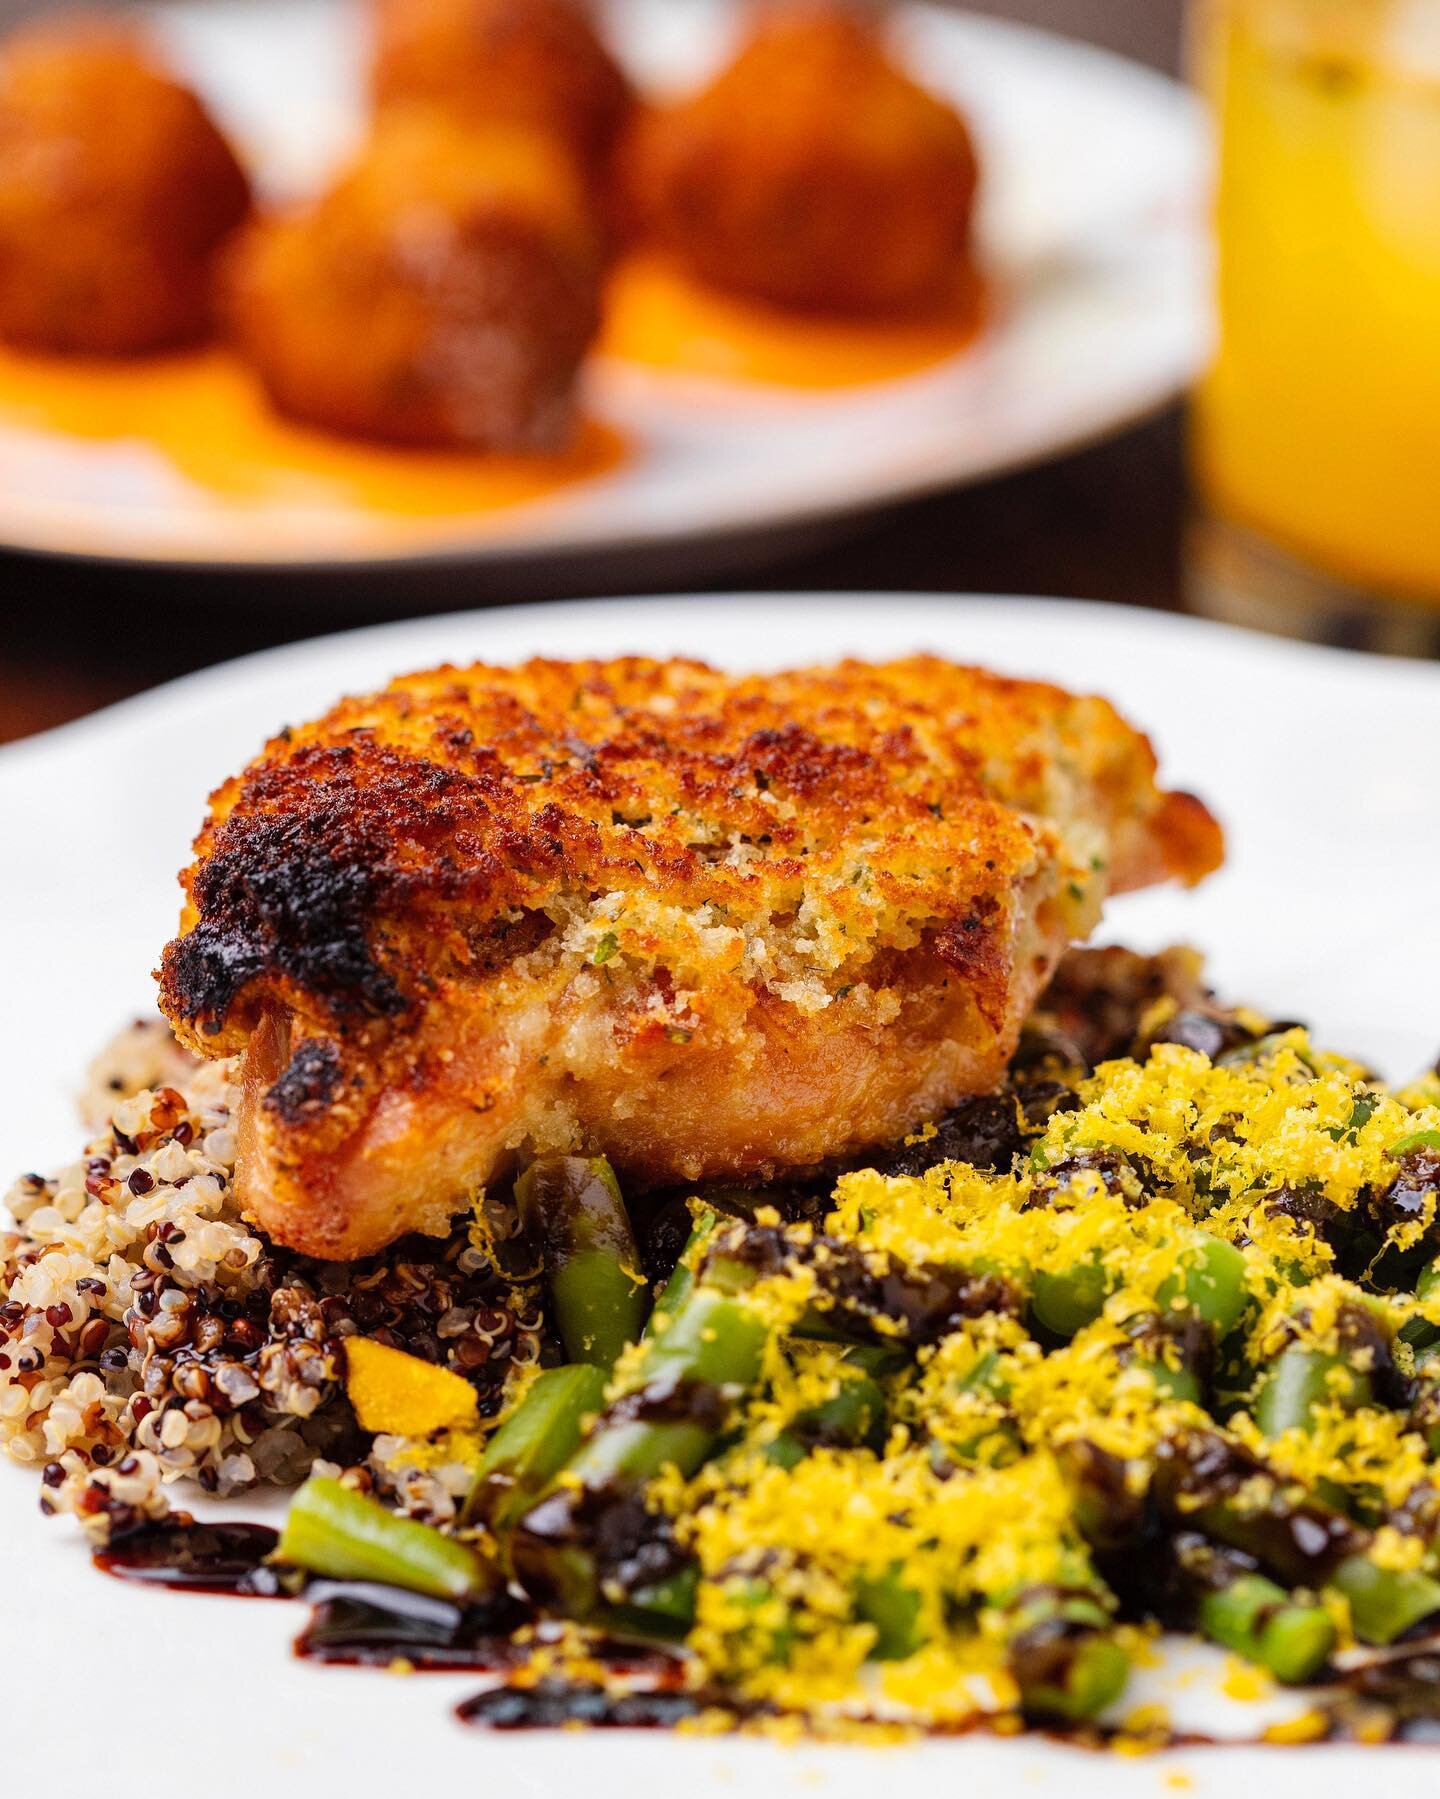 Brune Landaise Chicken with Parmesan Crust, Haricot Verts, Quinoa &amp; Balsamic. Available on our dinner menu &amp; @ubereats
.
.
.
📸 : @gnarshredjab 
.
.
.
#tullulahs #tullulahsbayshore #bayshore #longisland #newyork #southshoreeats #farmtotable #